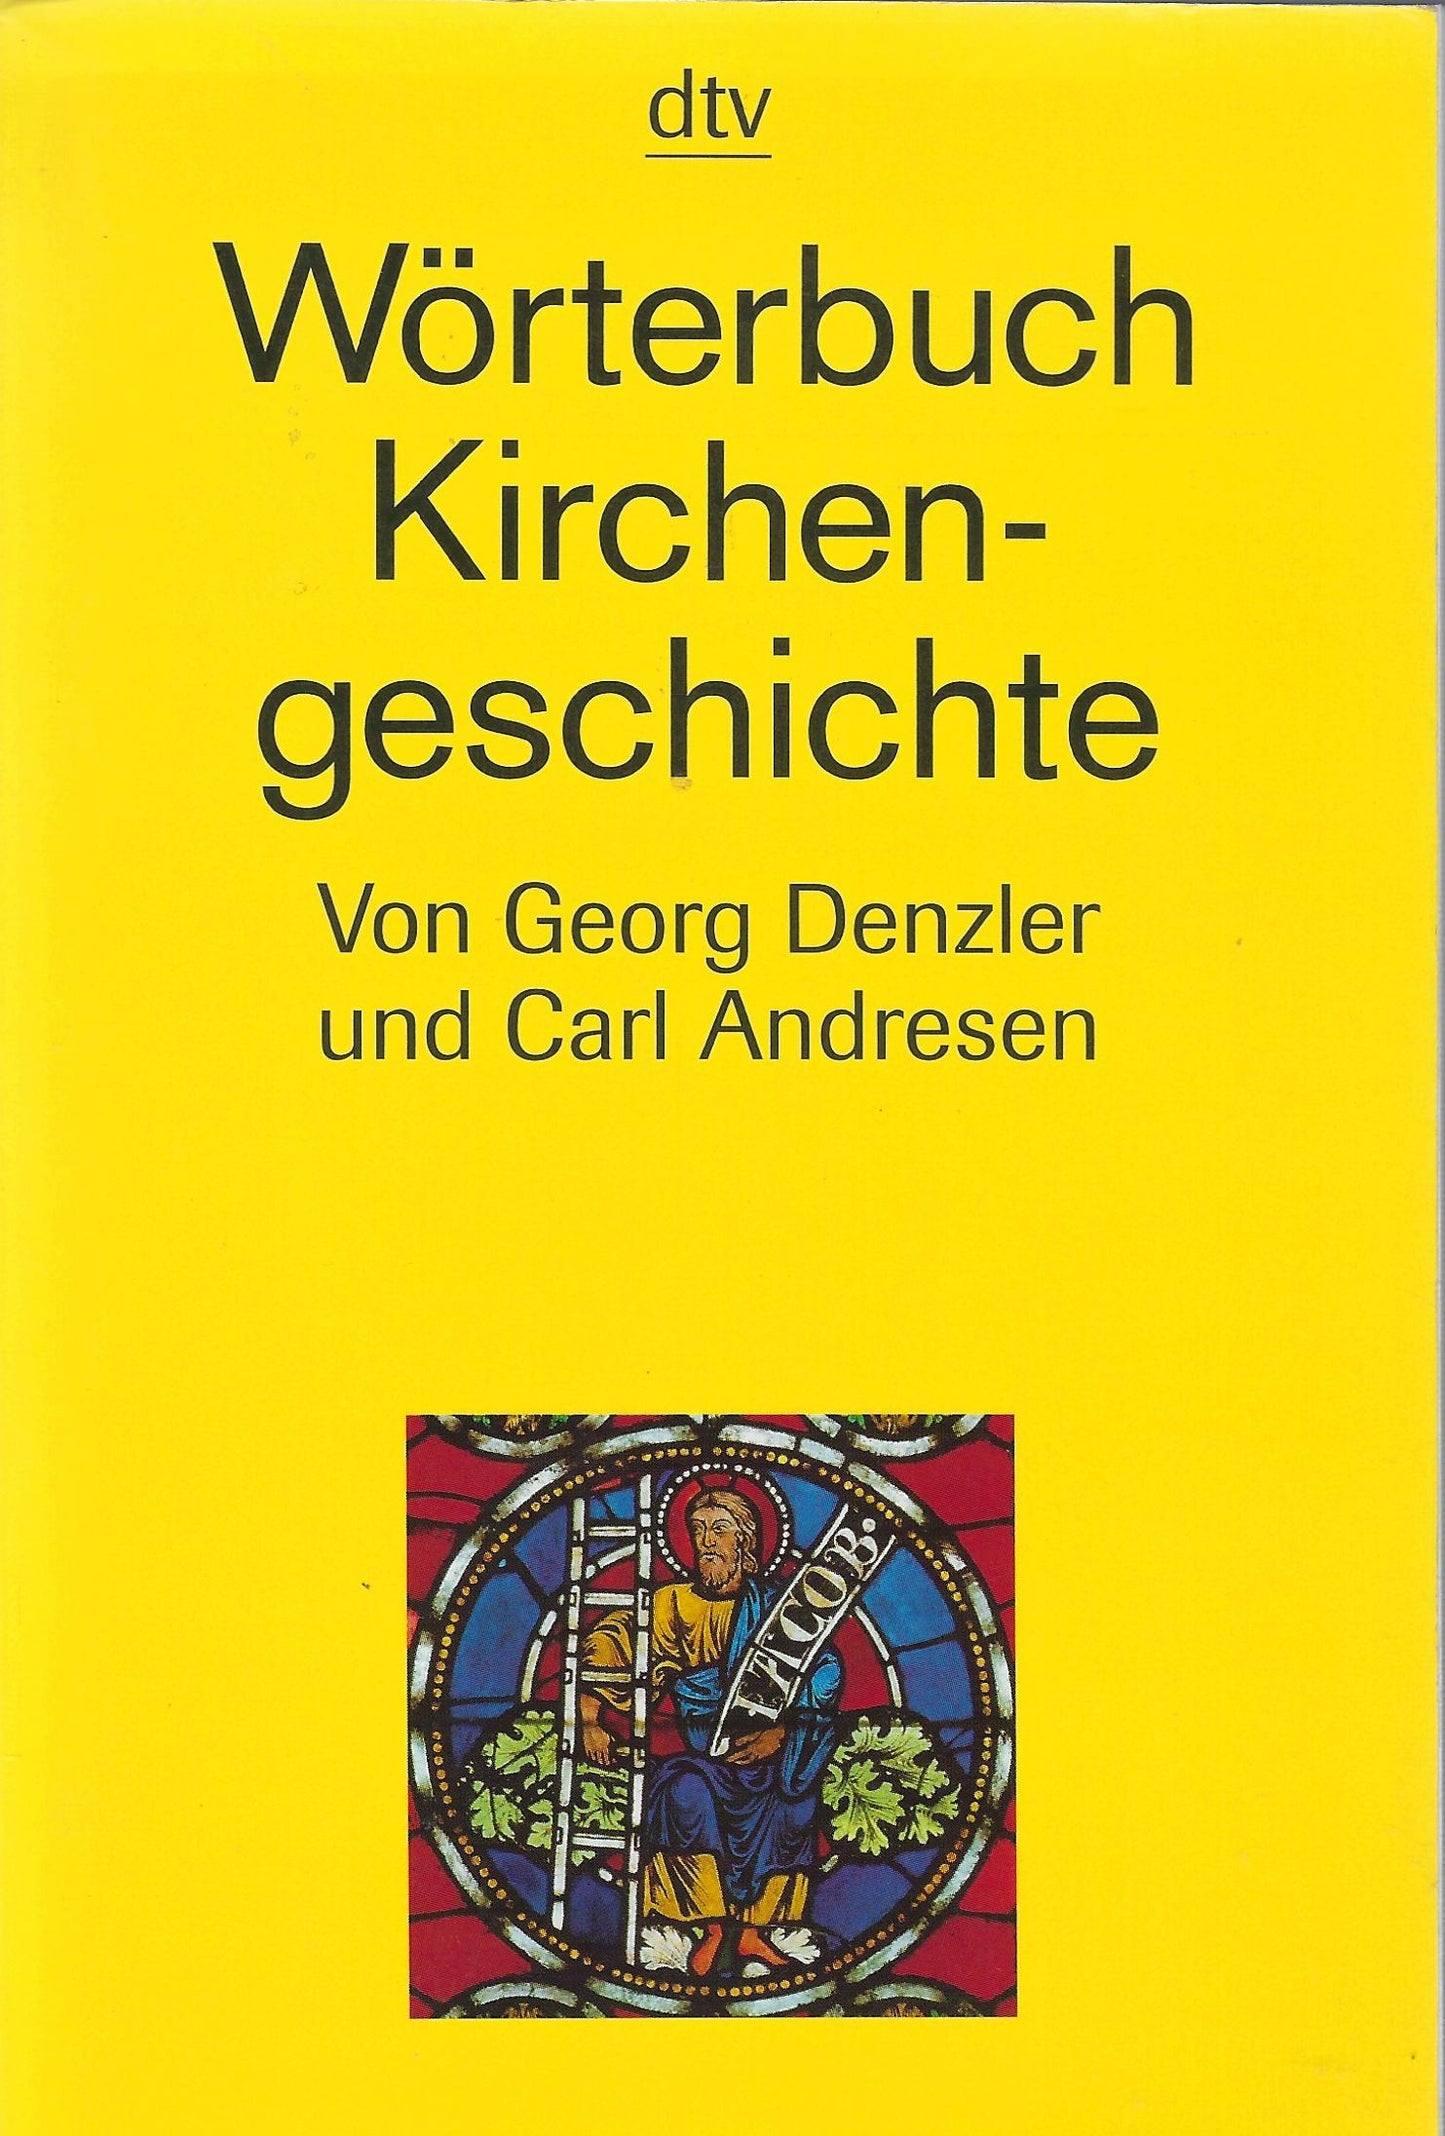 Wörterbuch Kirchengeschichte